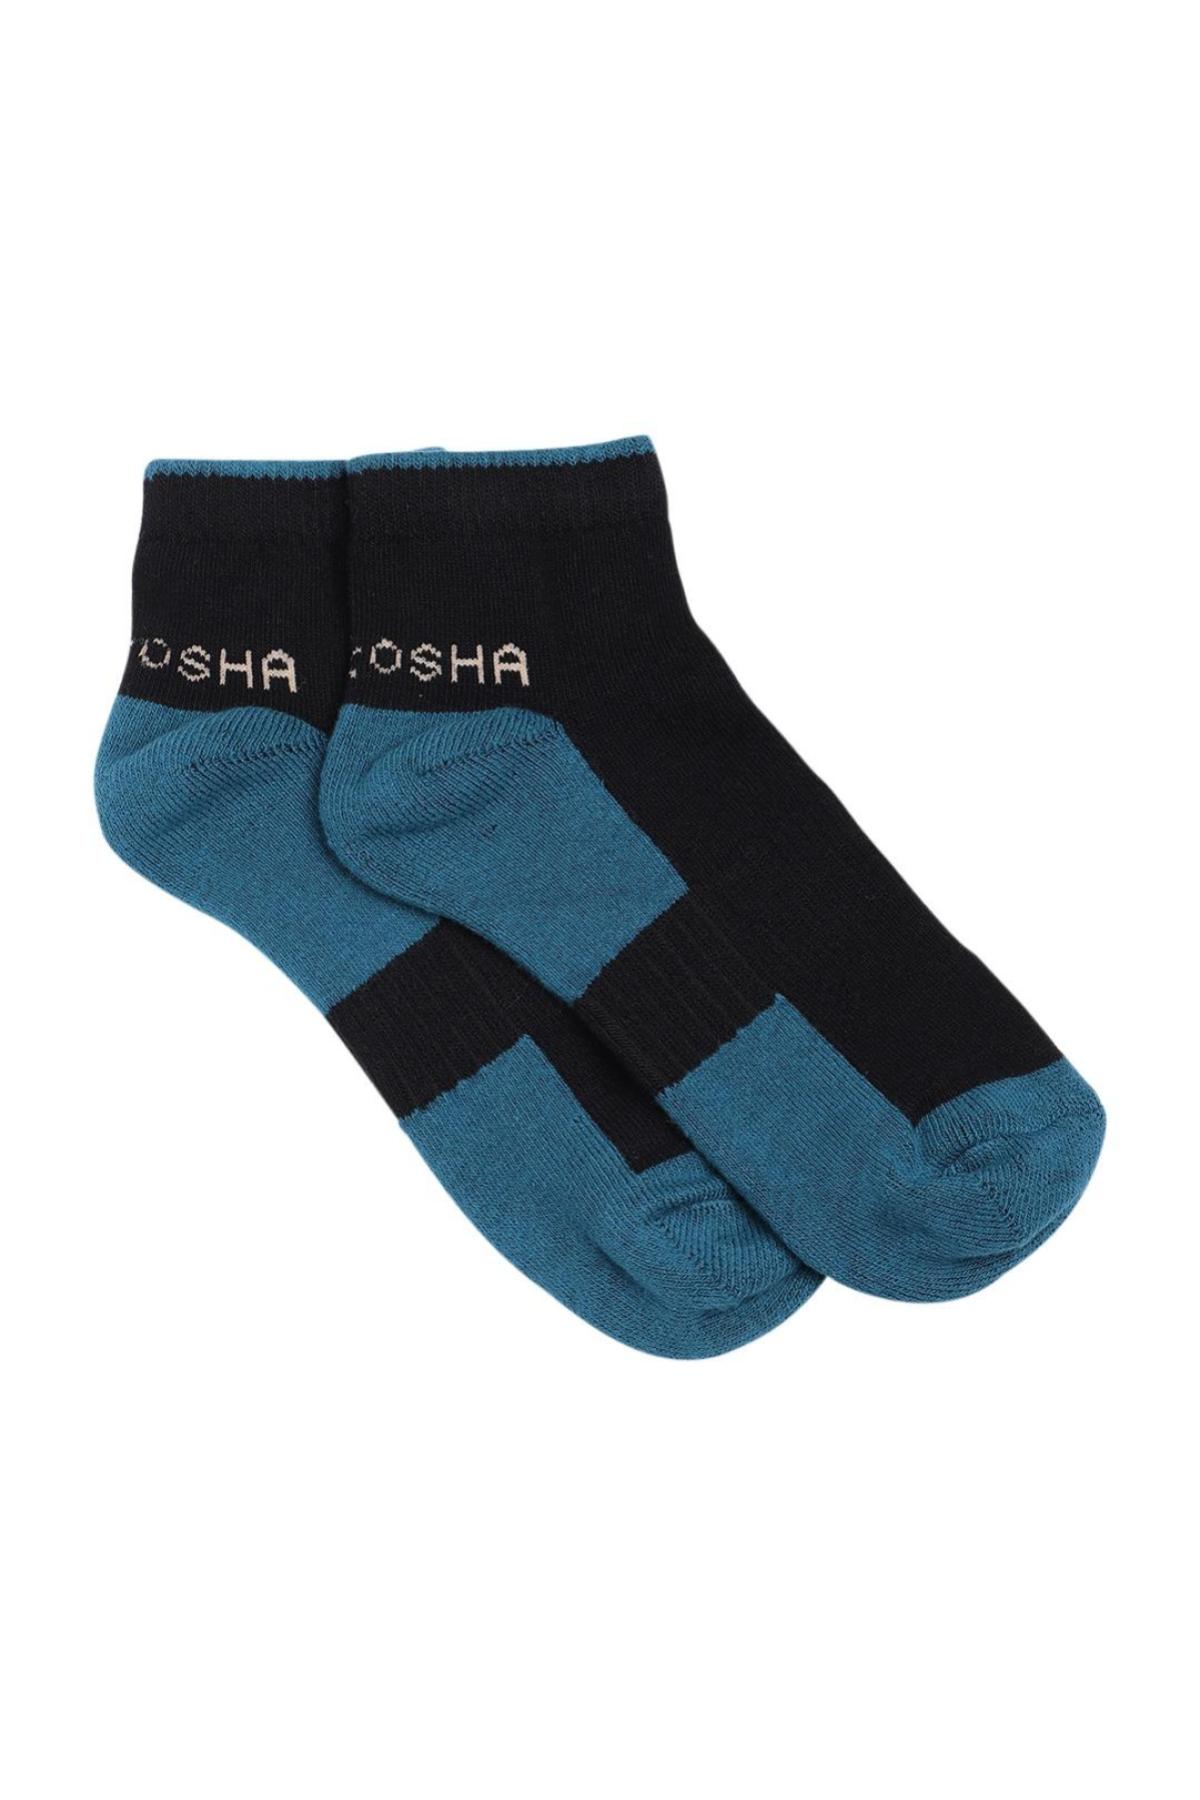 Black & Teal Ankle Length Cotton Sports Socks | Men